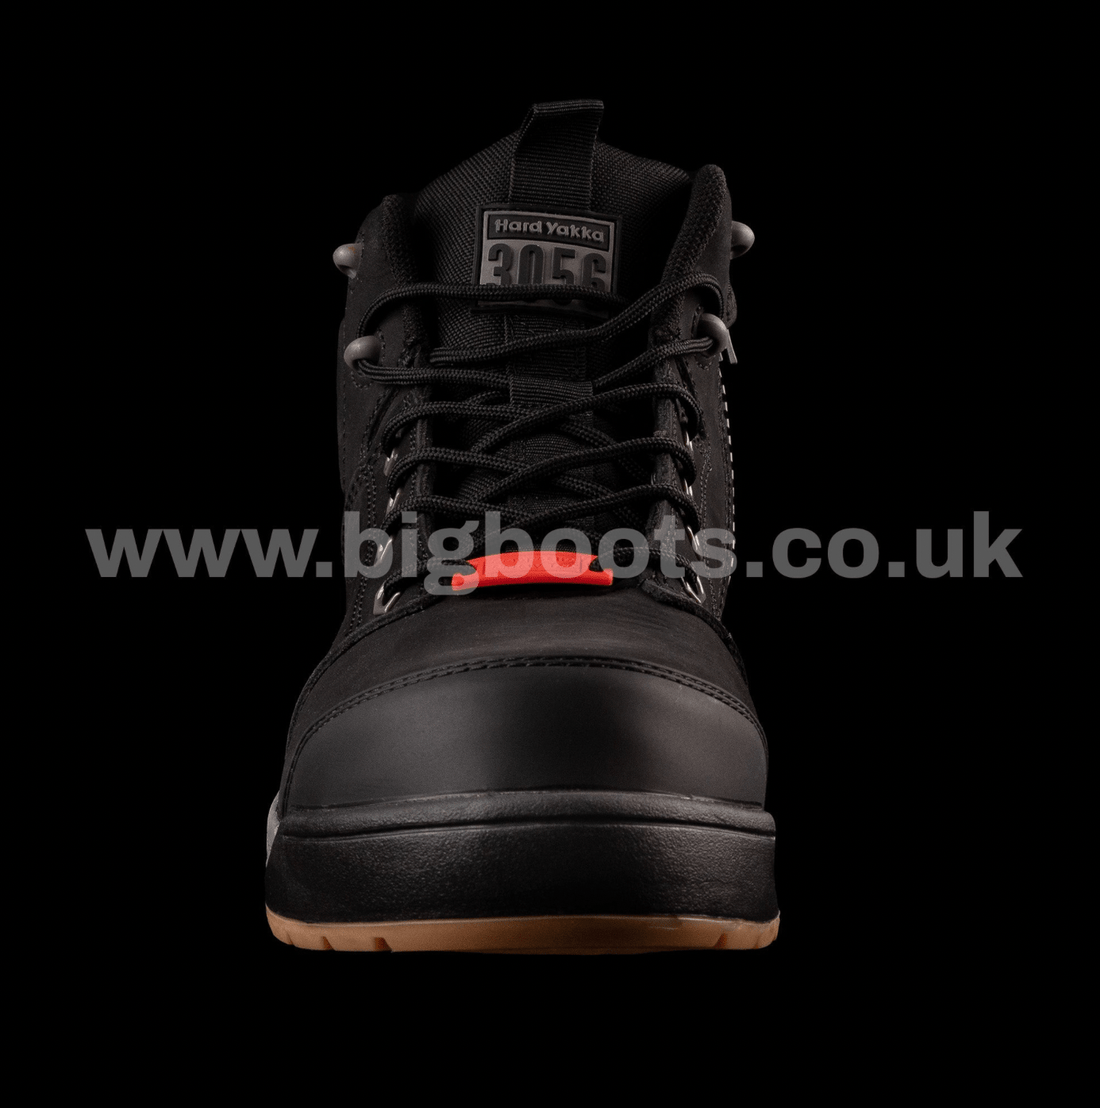 Hard Yakka Mens 3056 Zip Sided Work Boots - Black - BIG Boots UK